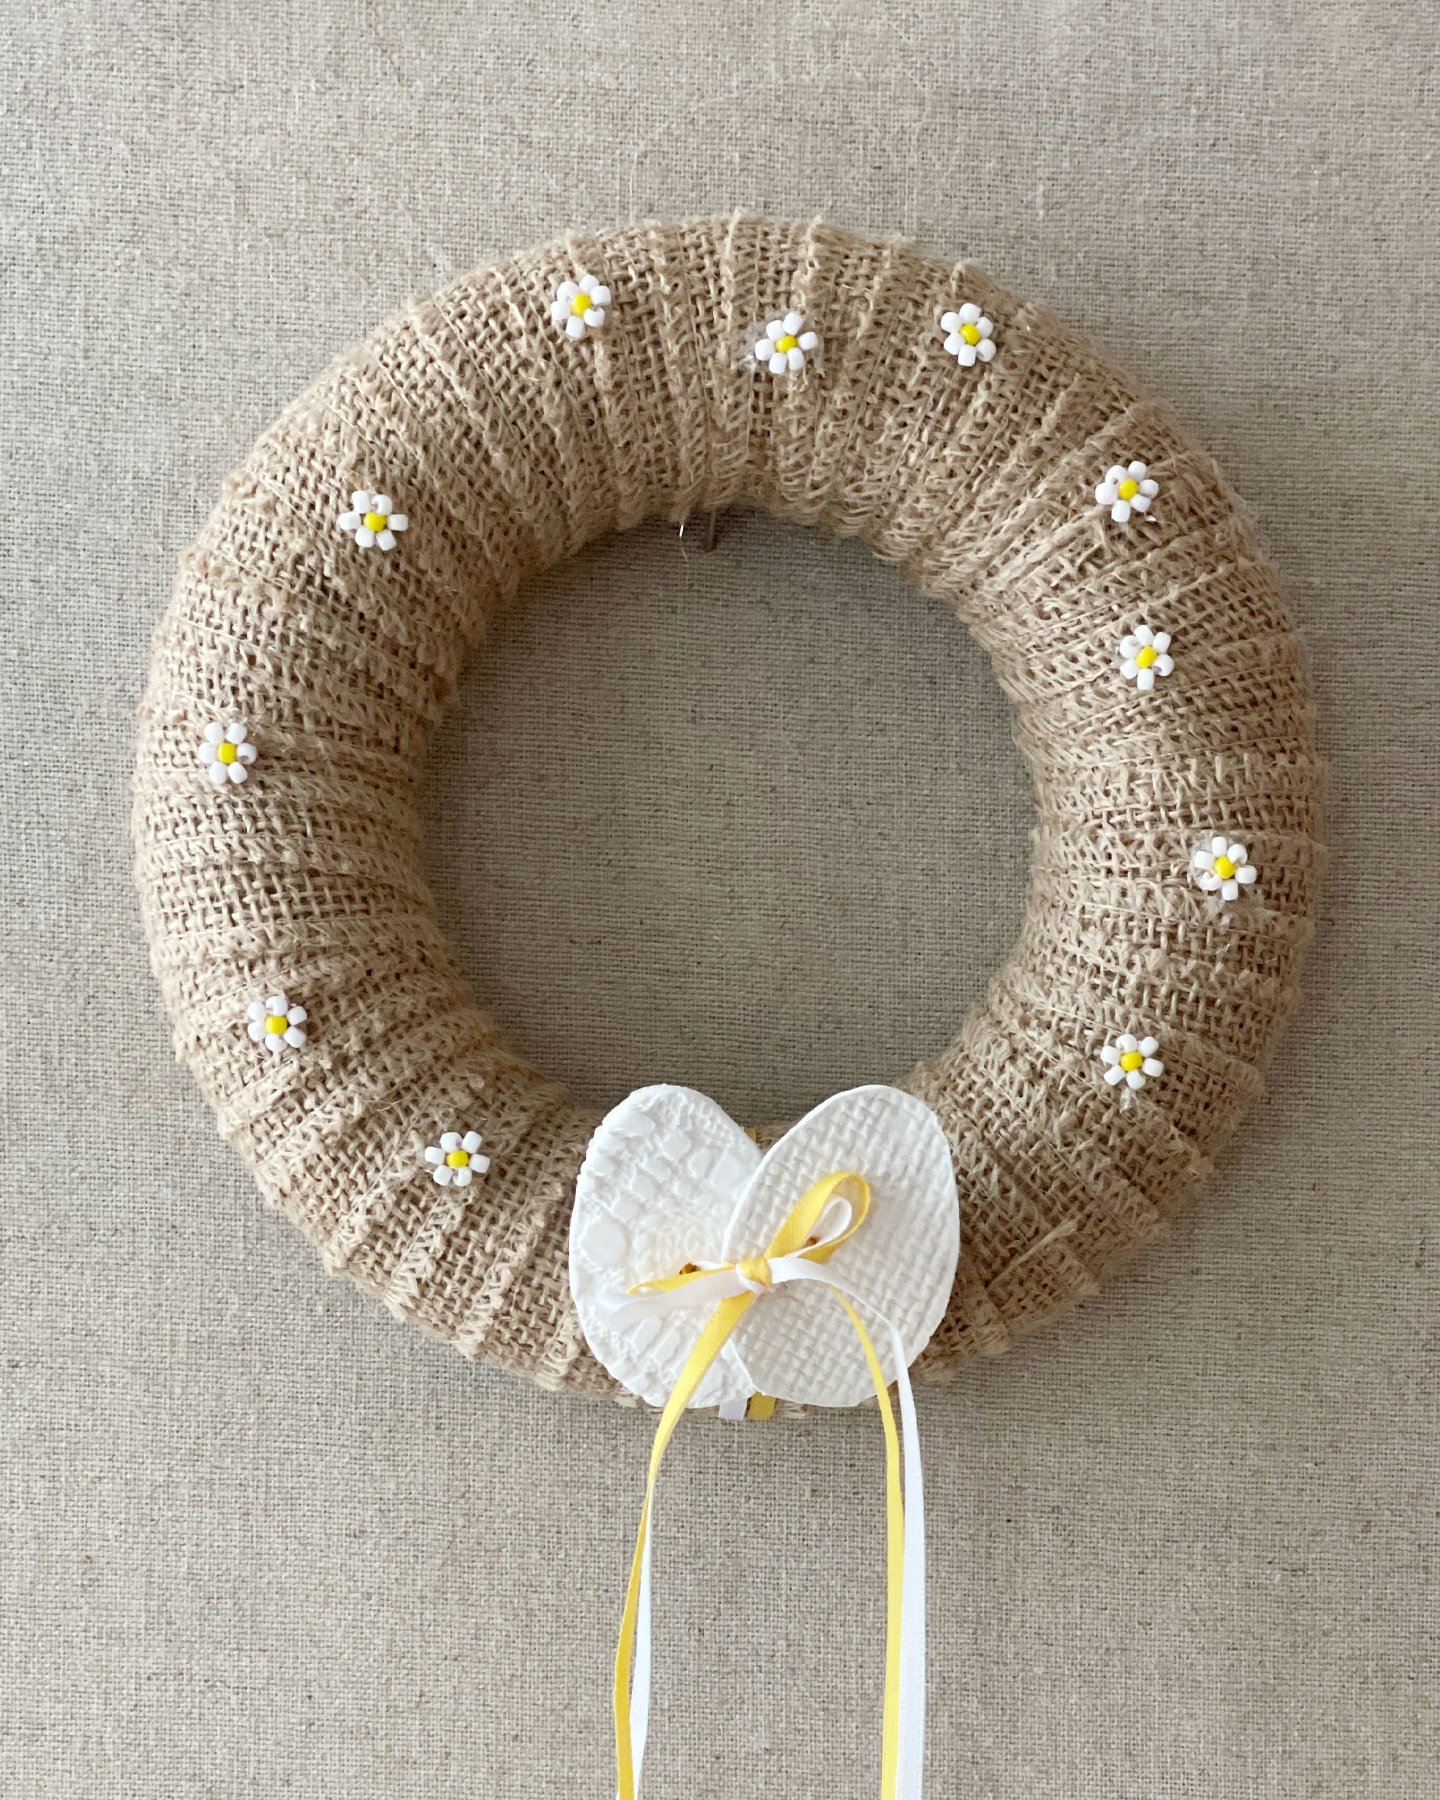 DIY: Jute-wrapped Easter wreath with marguerites DIY4309_Image.jpg